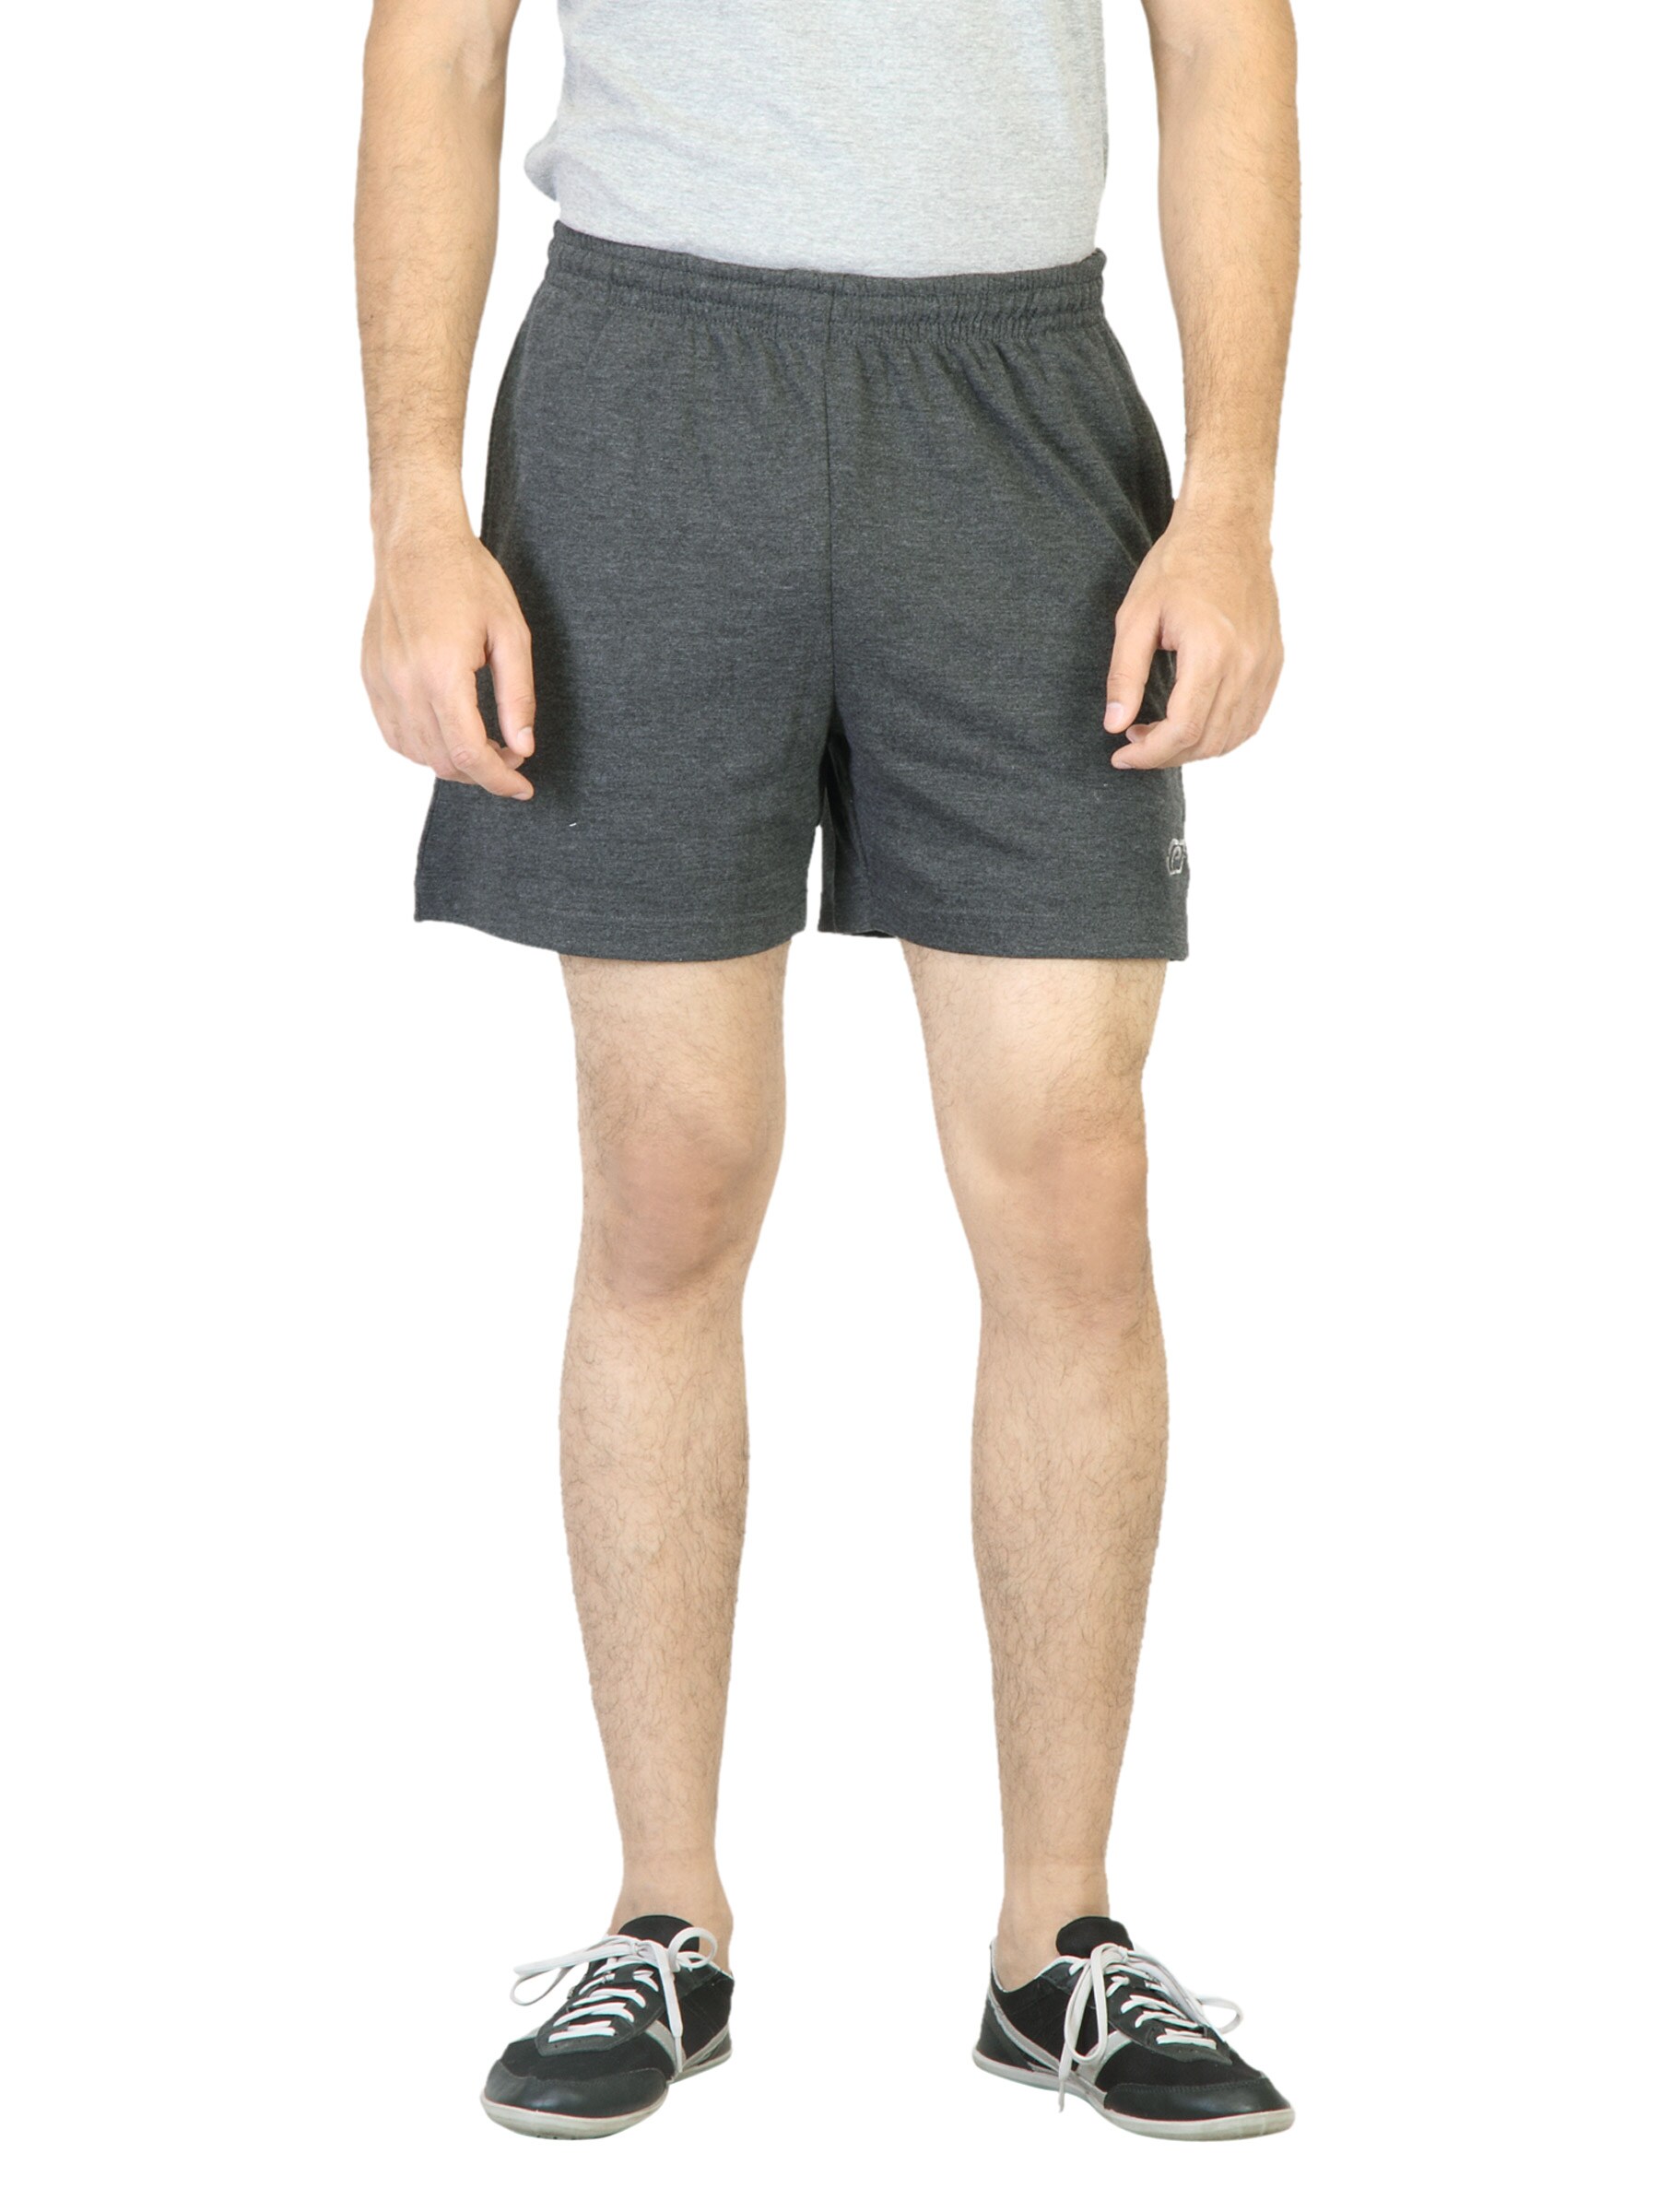 Proline Charcoal Grey Shorts